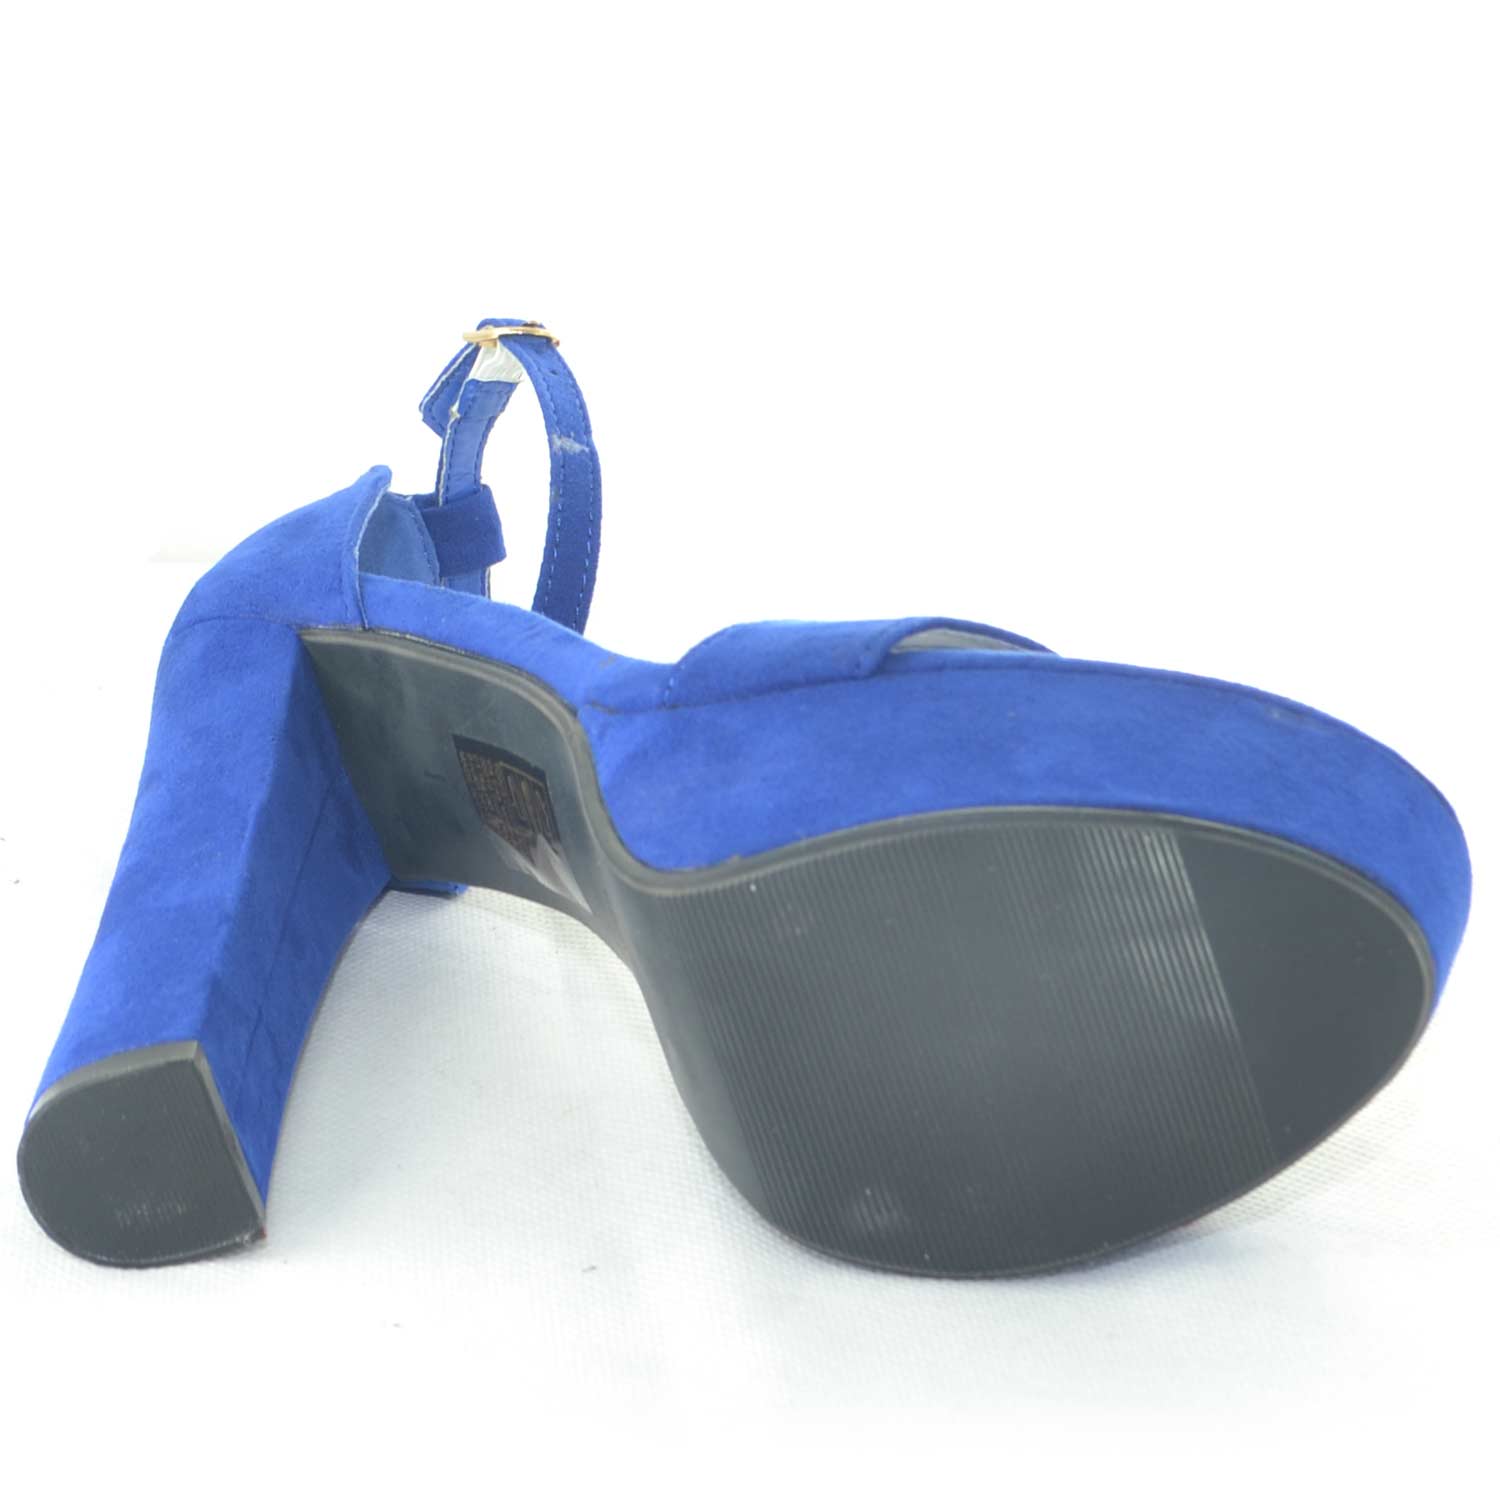 sandali blu elettrico eleganti